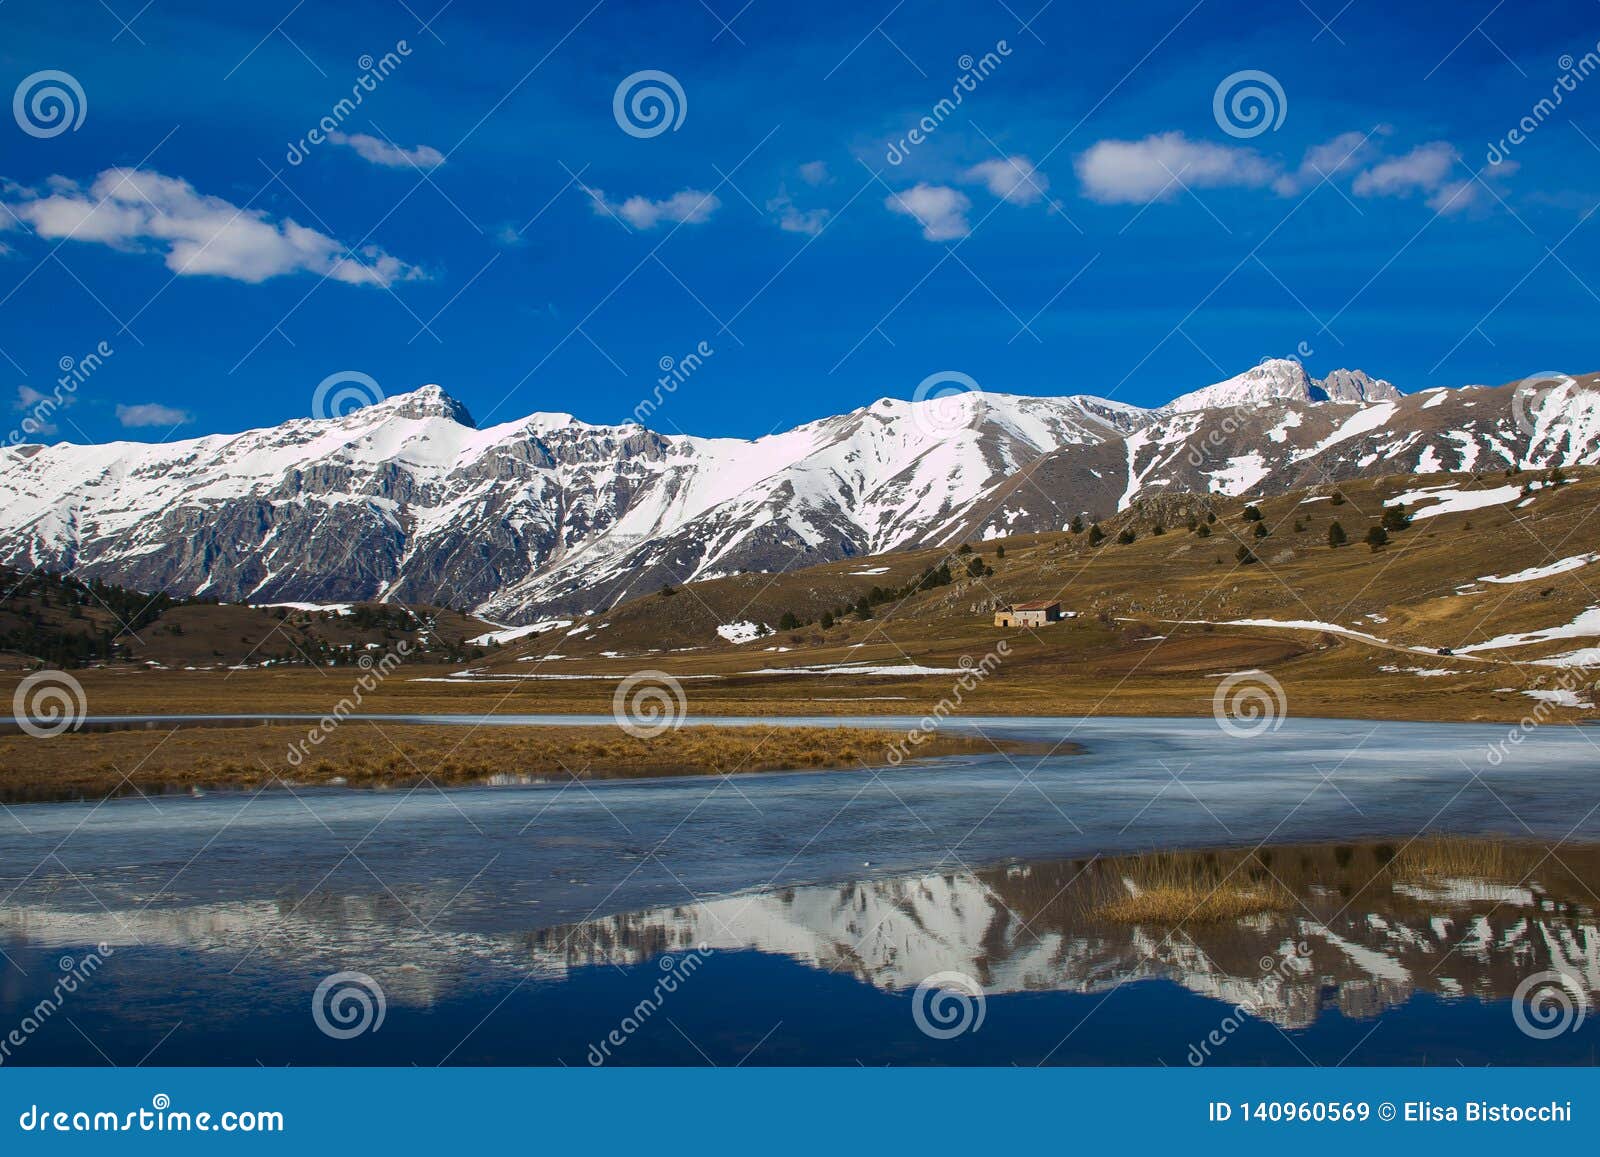 idyllic mountain lake in the gran sasso e monti della laga national park